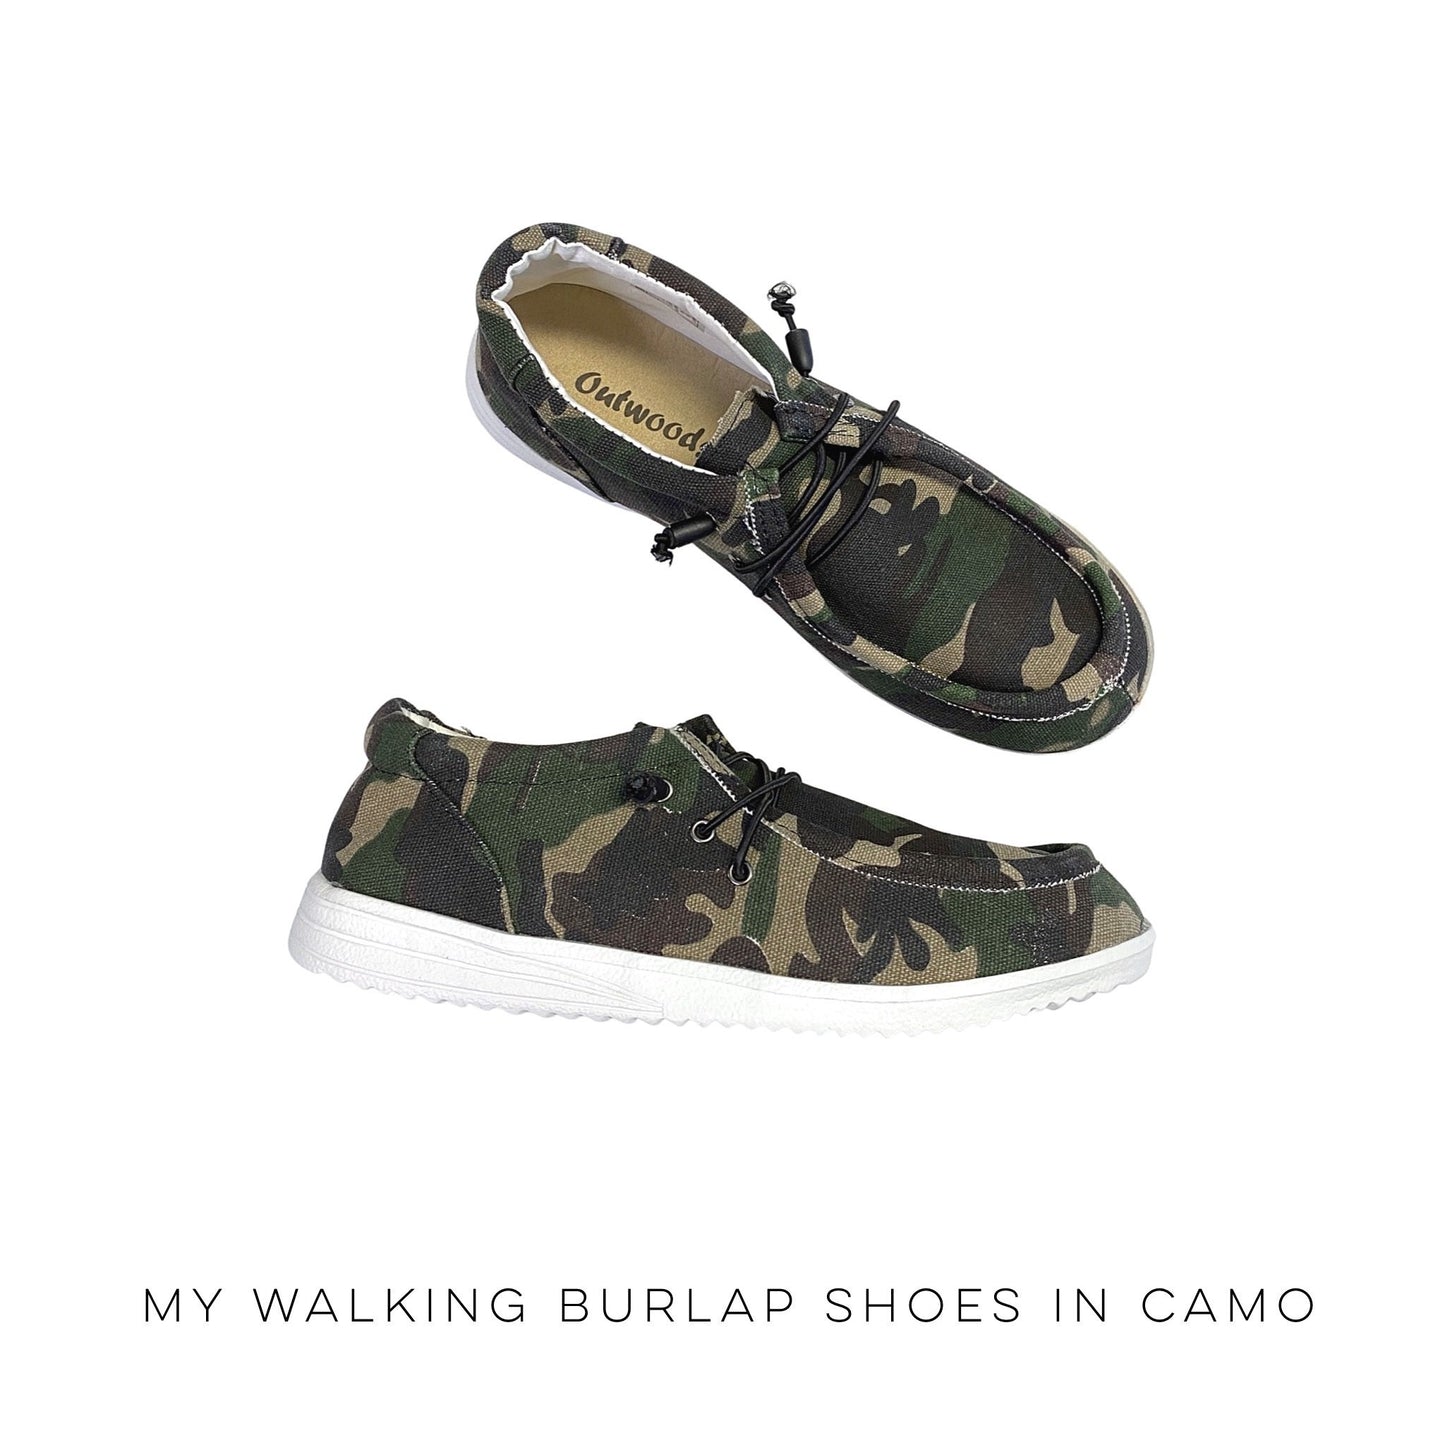 My Walking Burlap Shoes in Camo